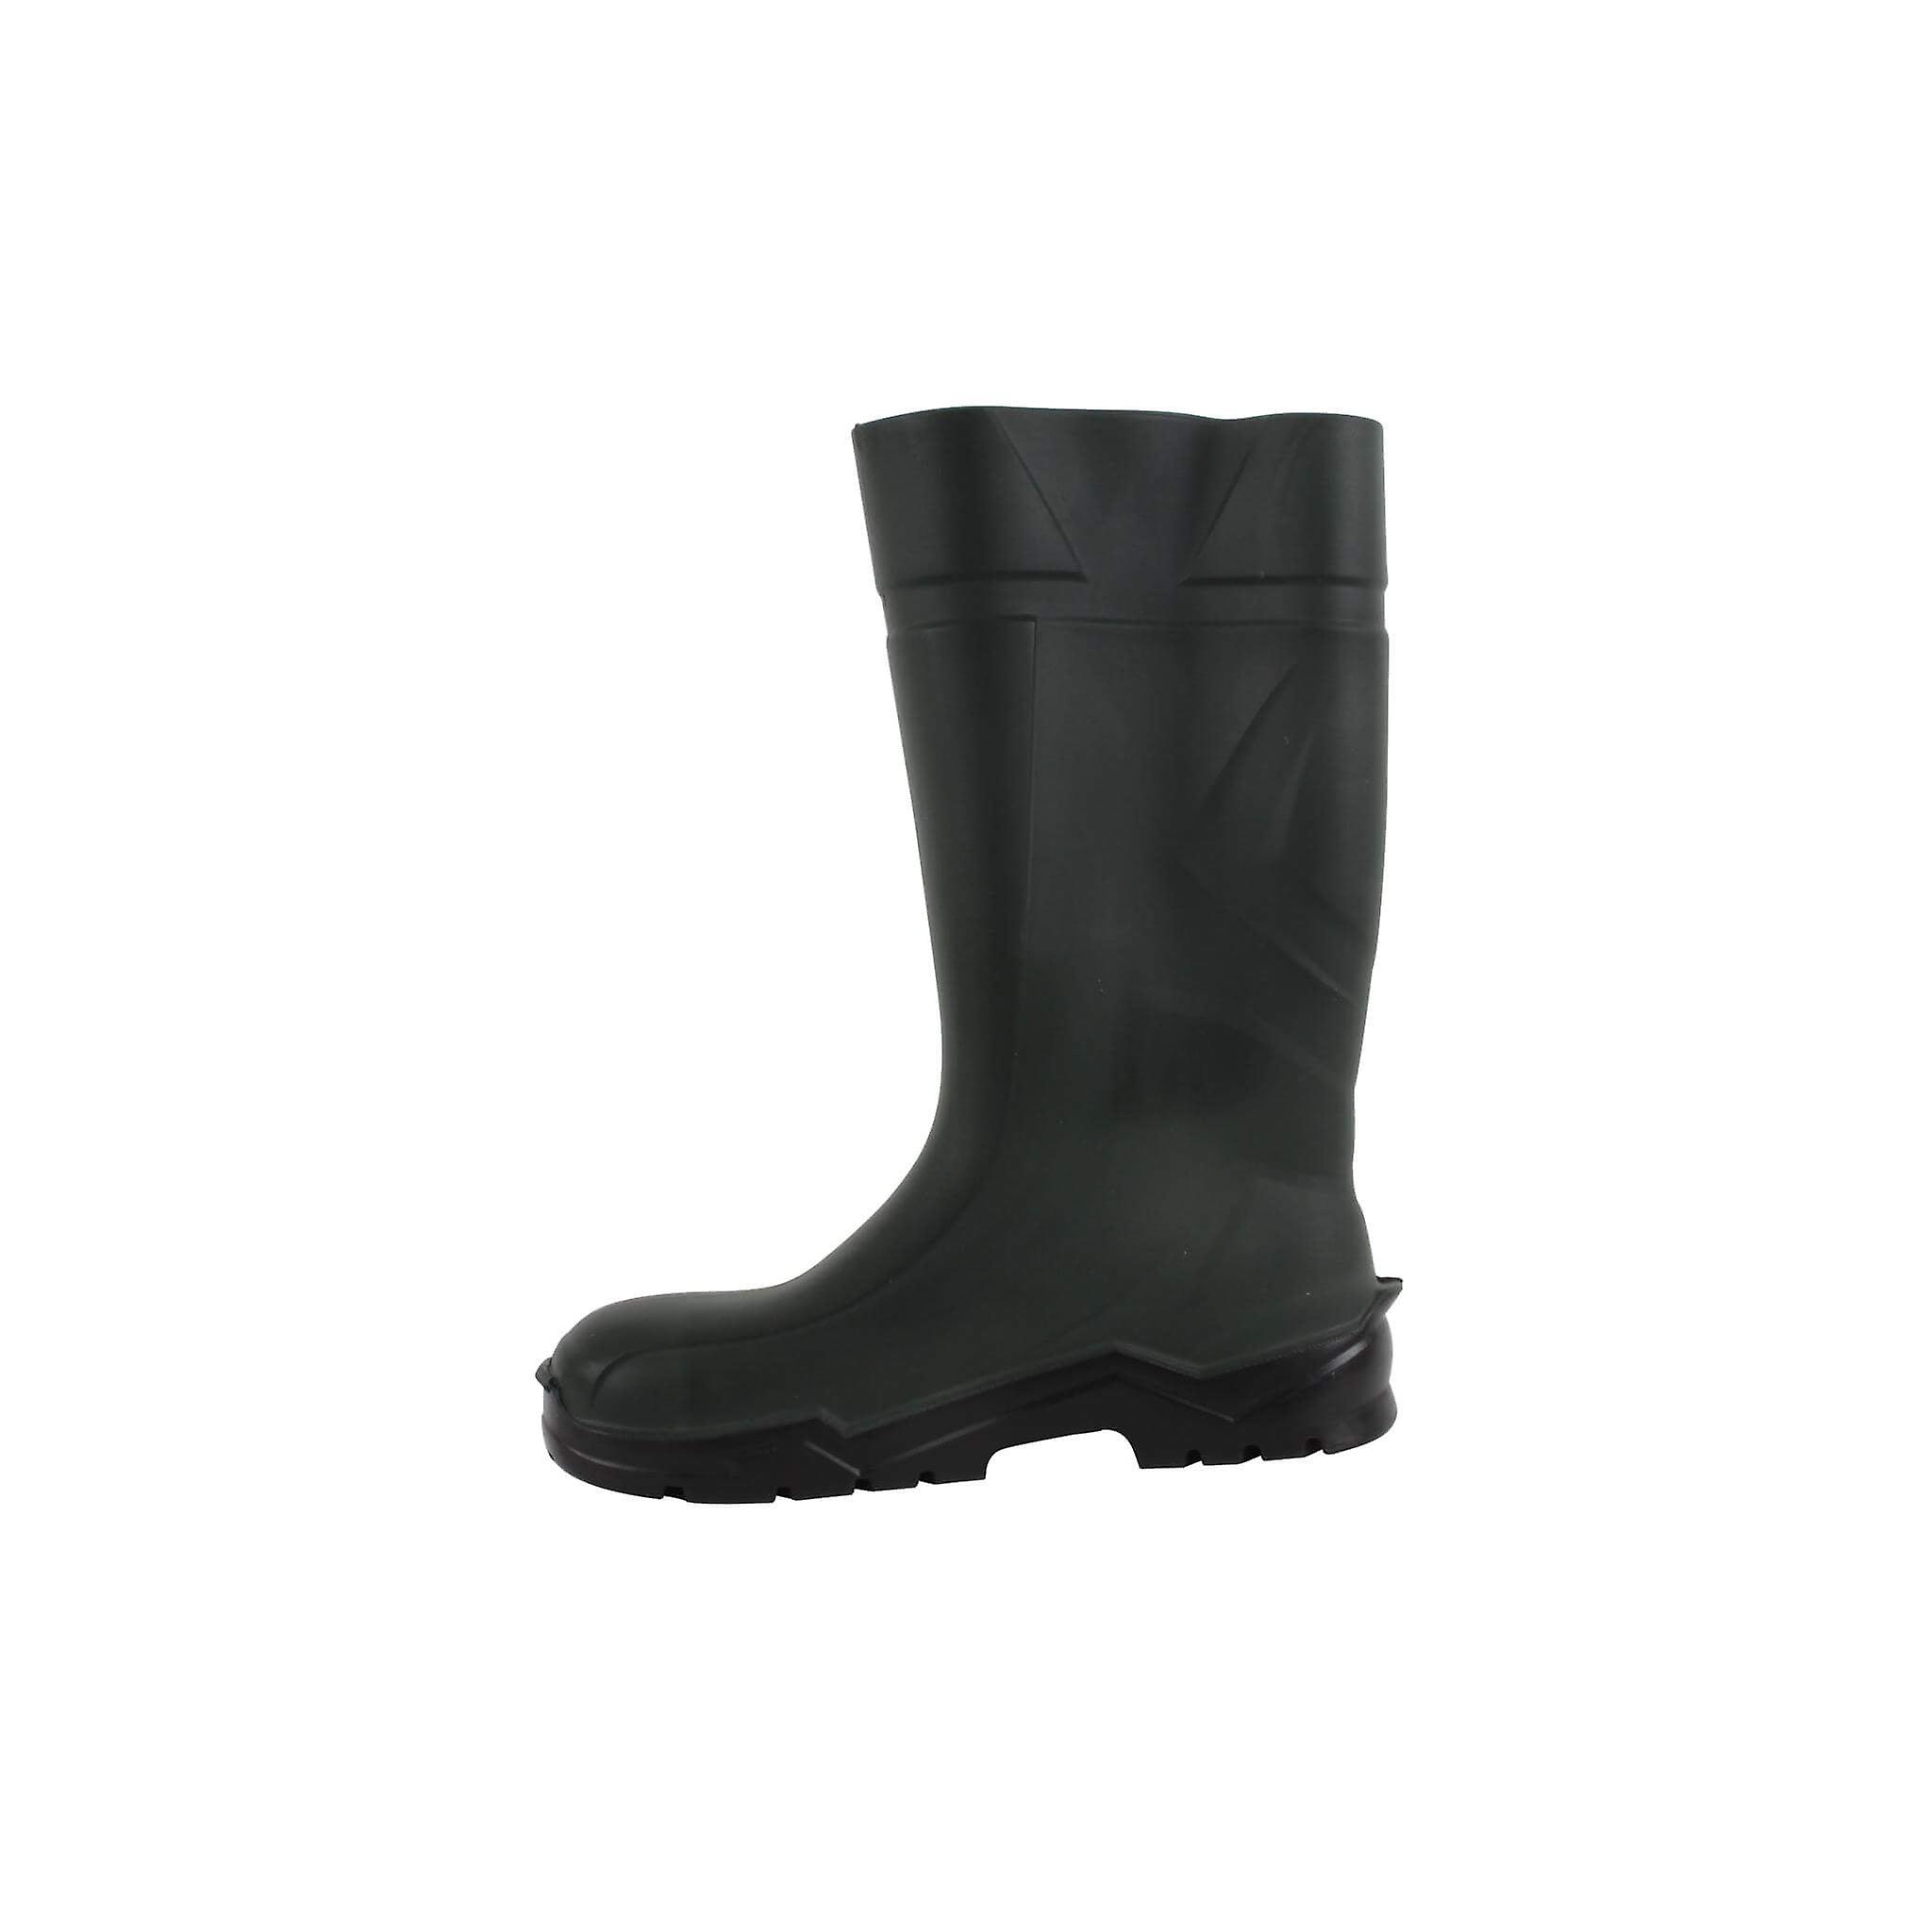 Blackrock premium pu non-safety wellington boots